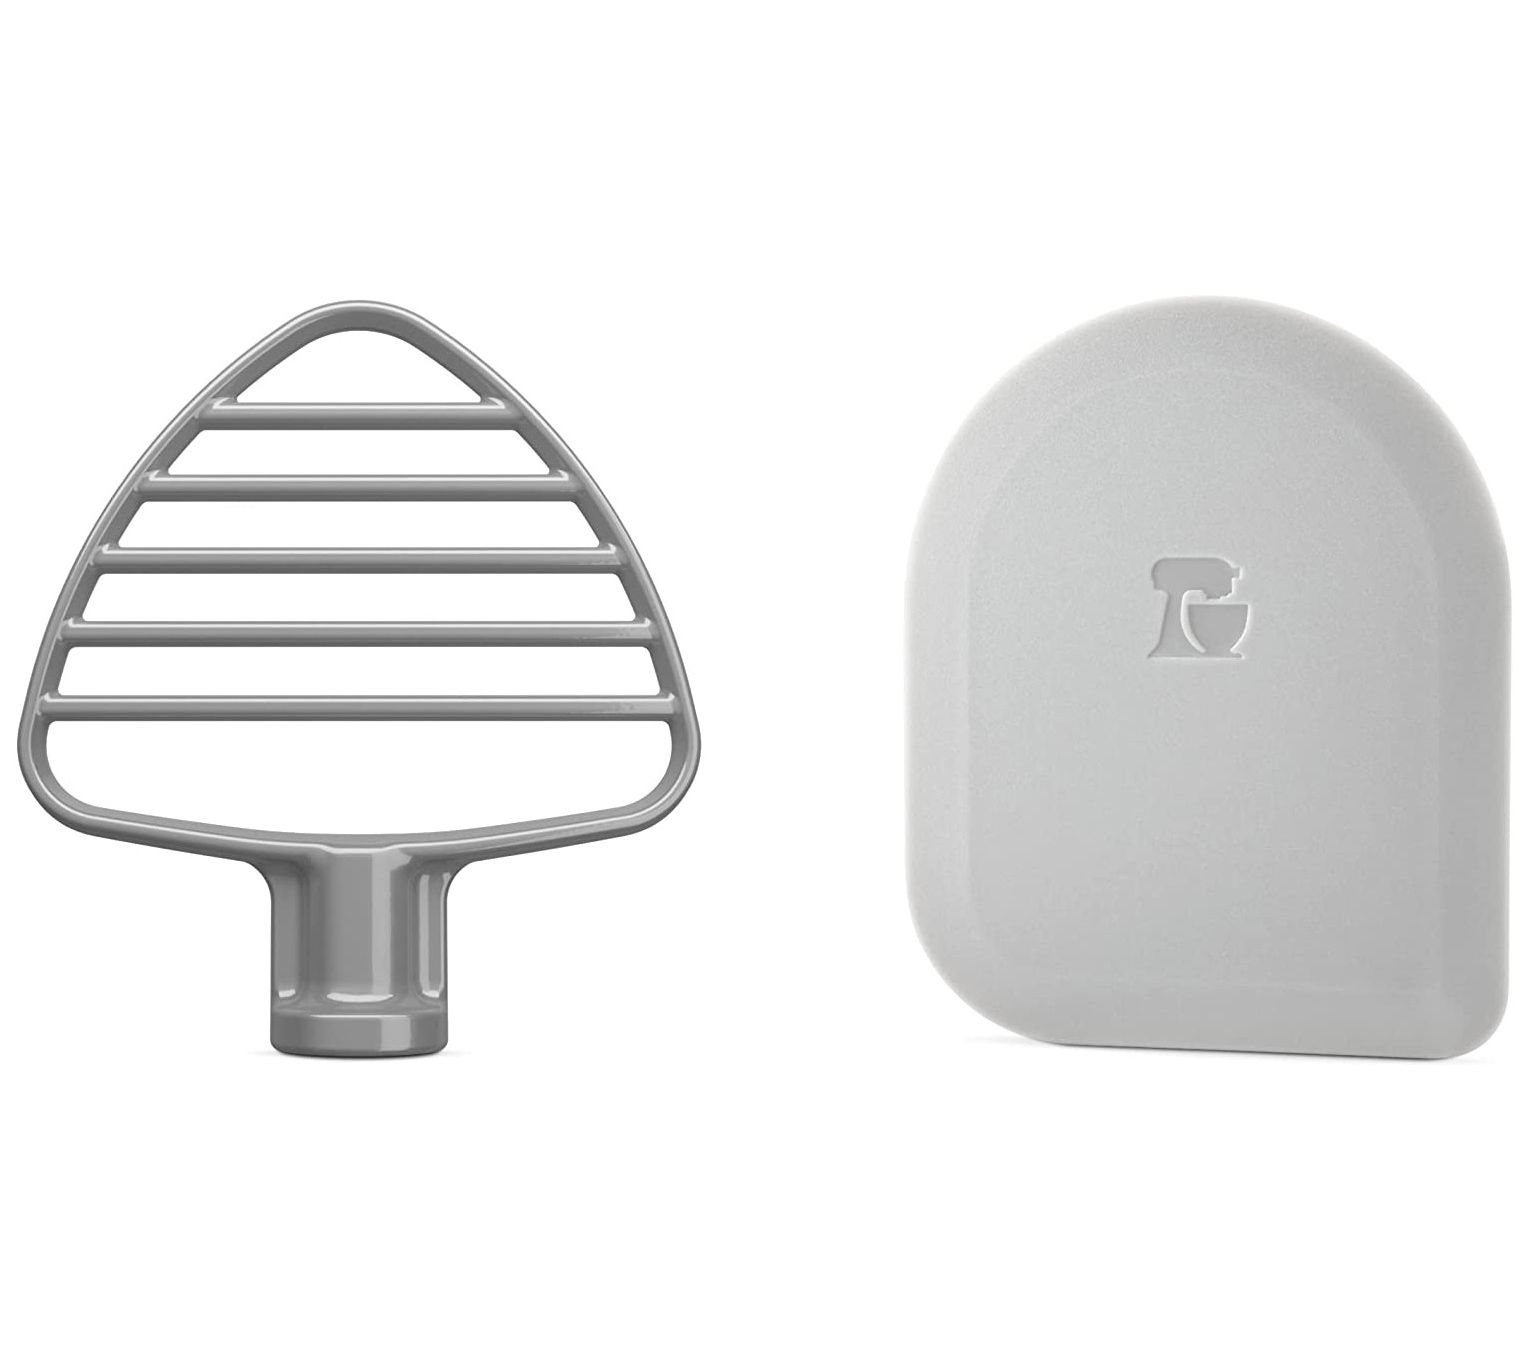 Kitchenaid Paddle Attachments for Kitchen Aid Tilt-Head Stand